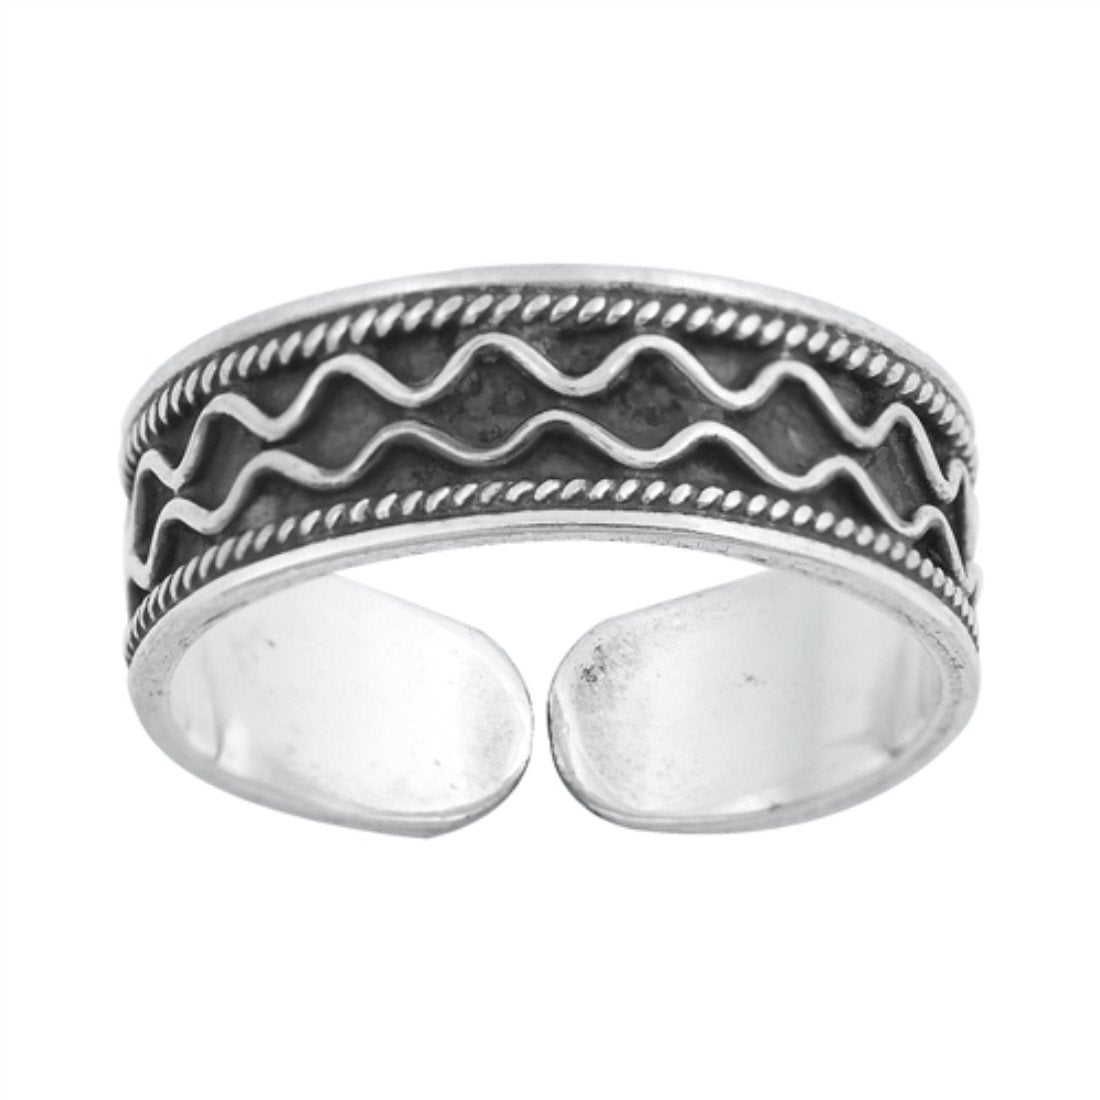 Silver Toe Ring Band Bali Design Adjustable 925 Sterling Silver (5mm)